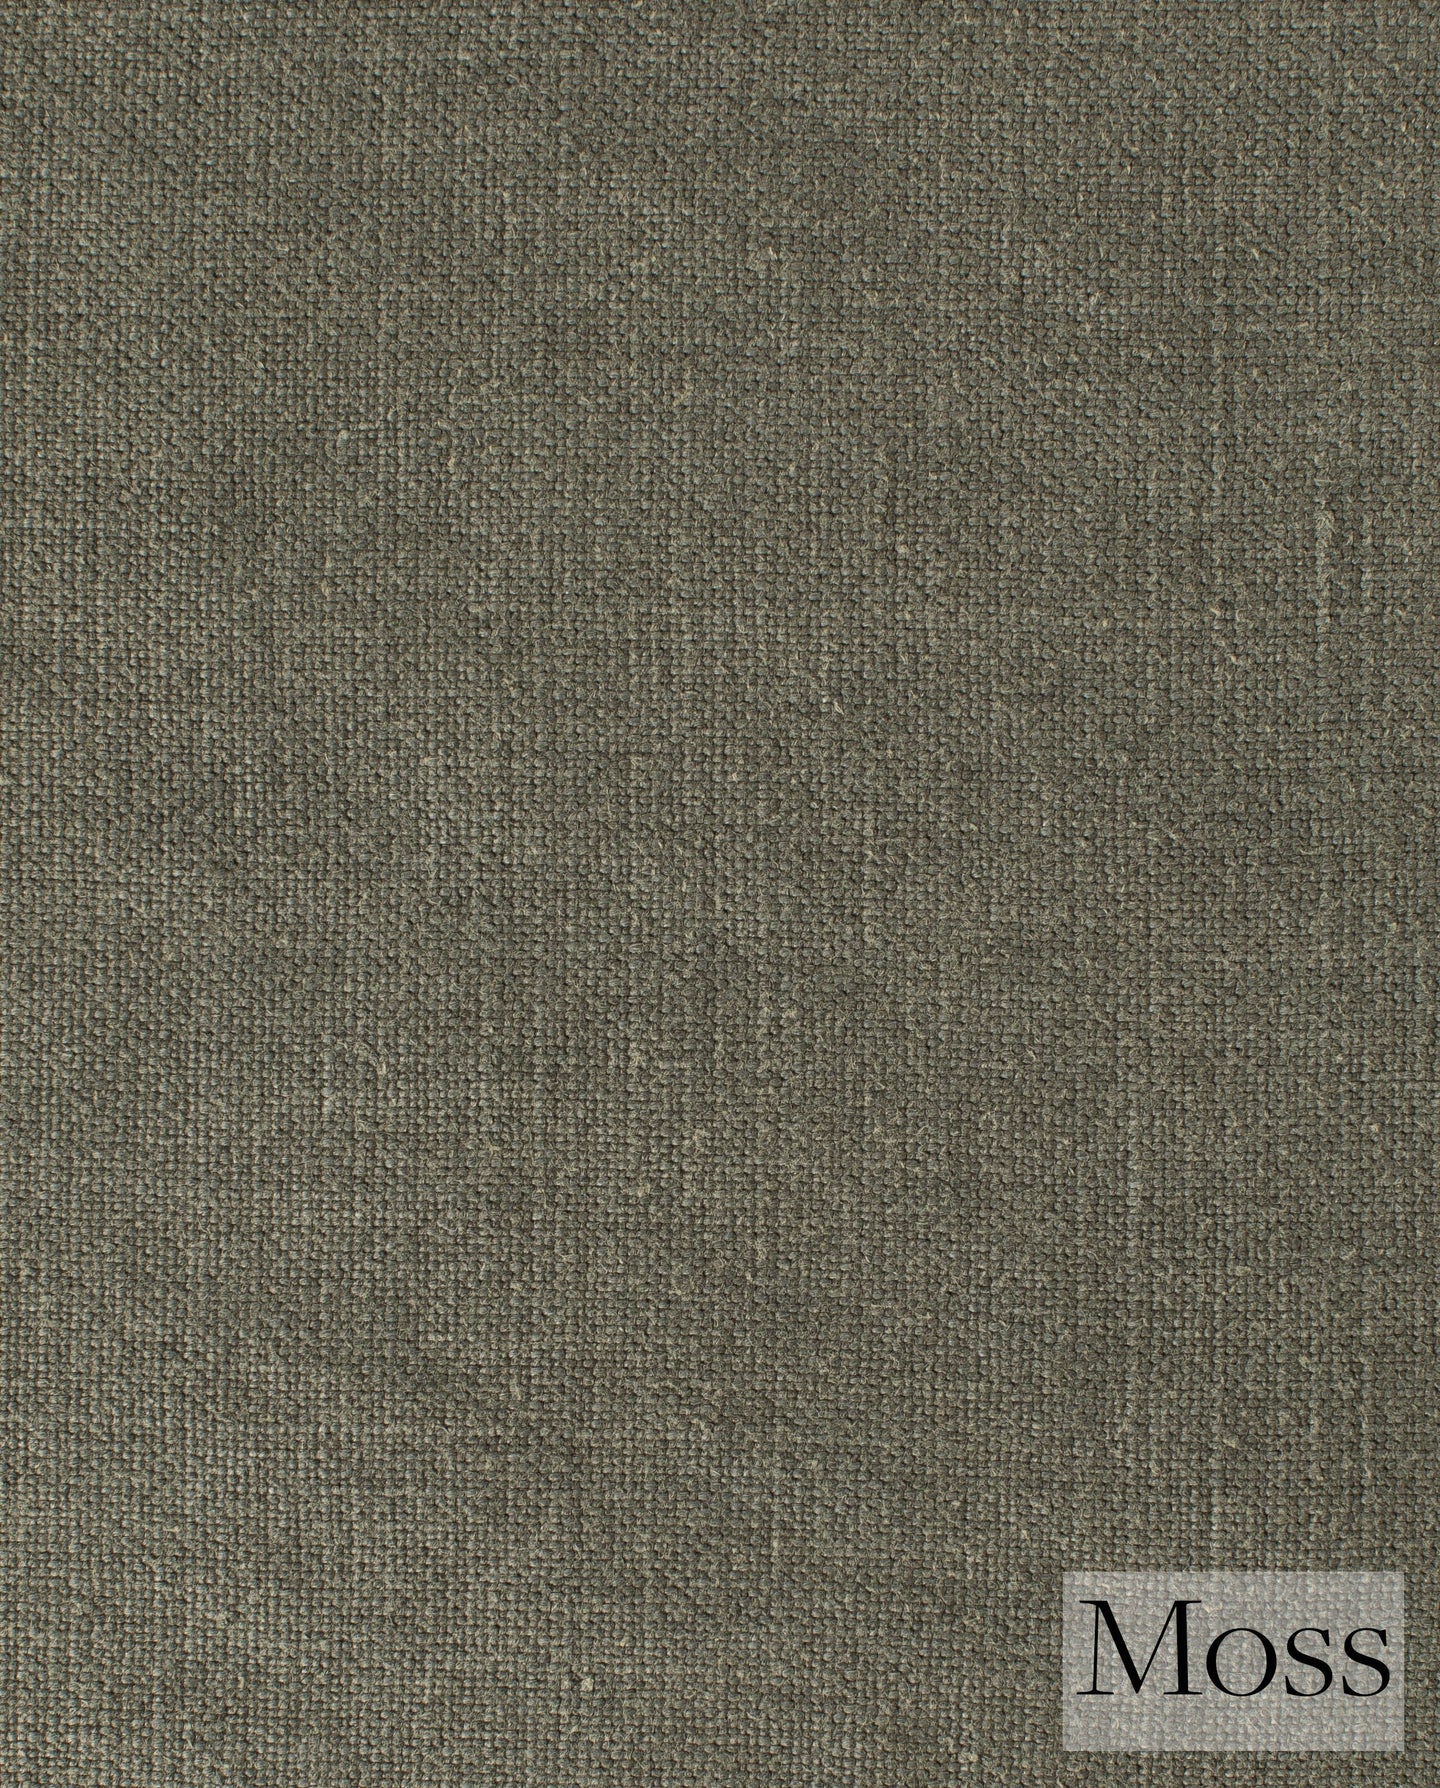 Moss Fabric Swatch